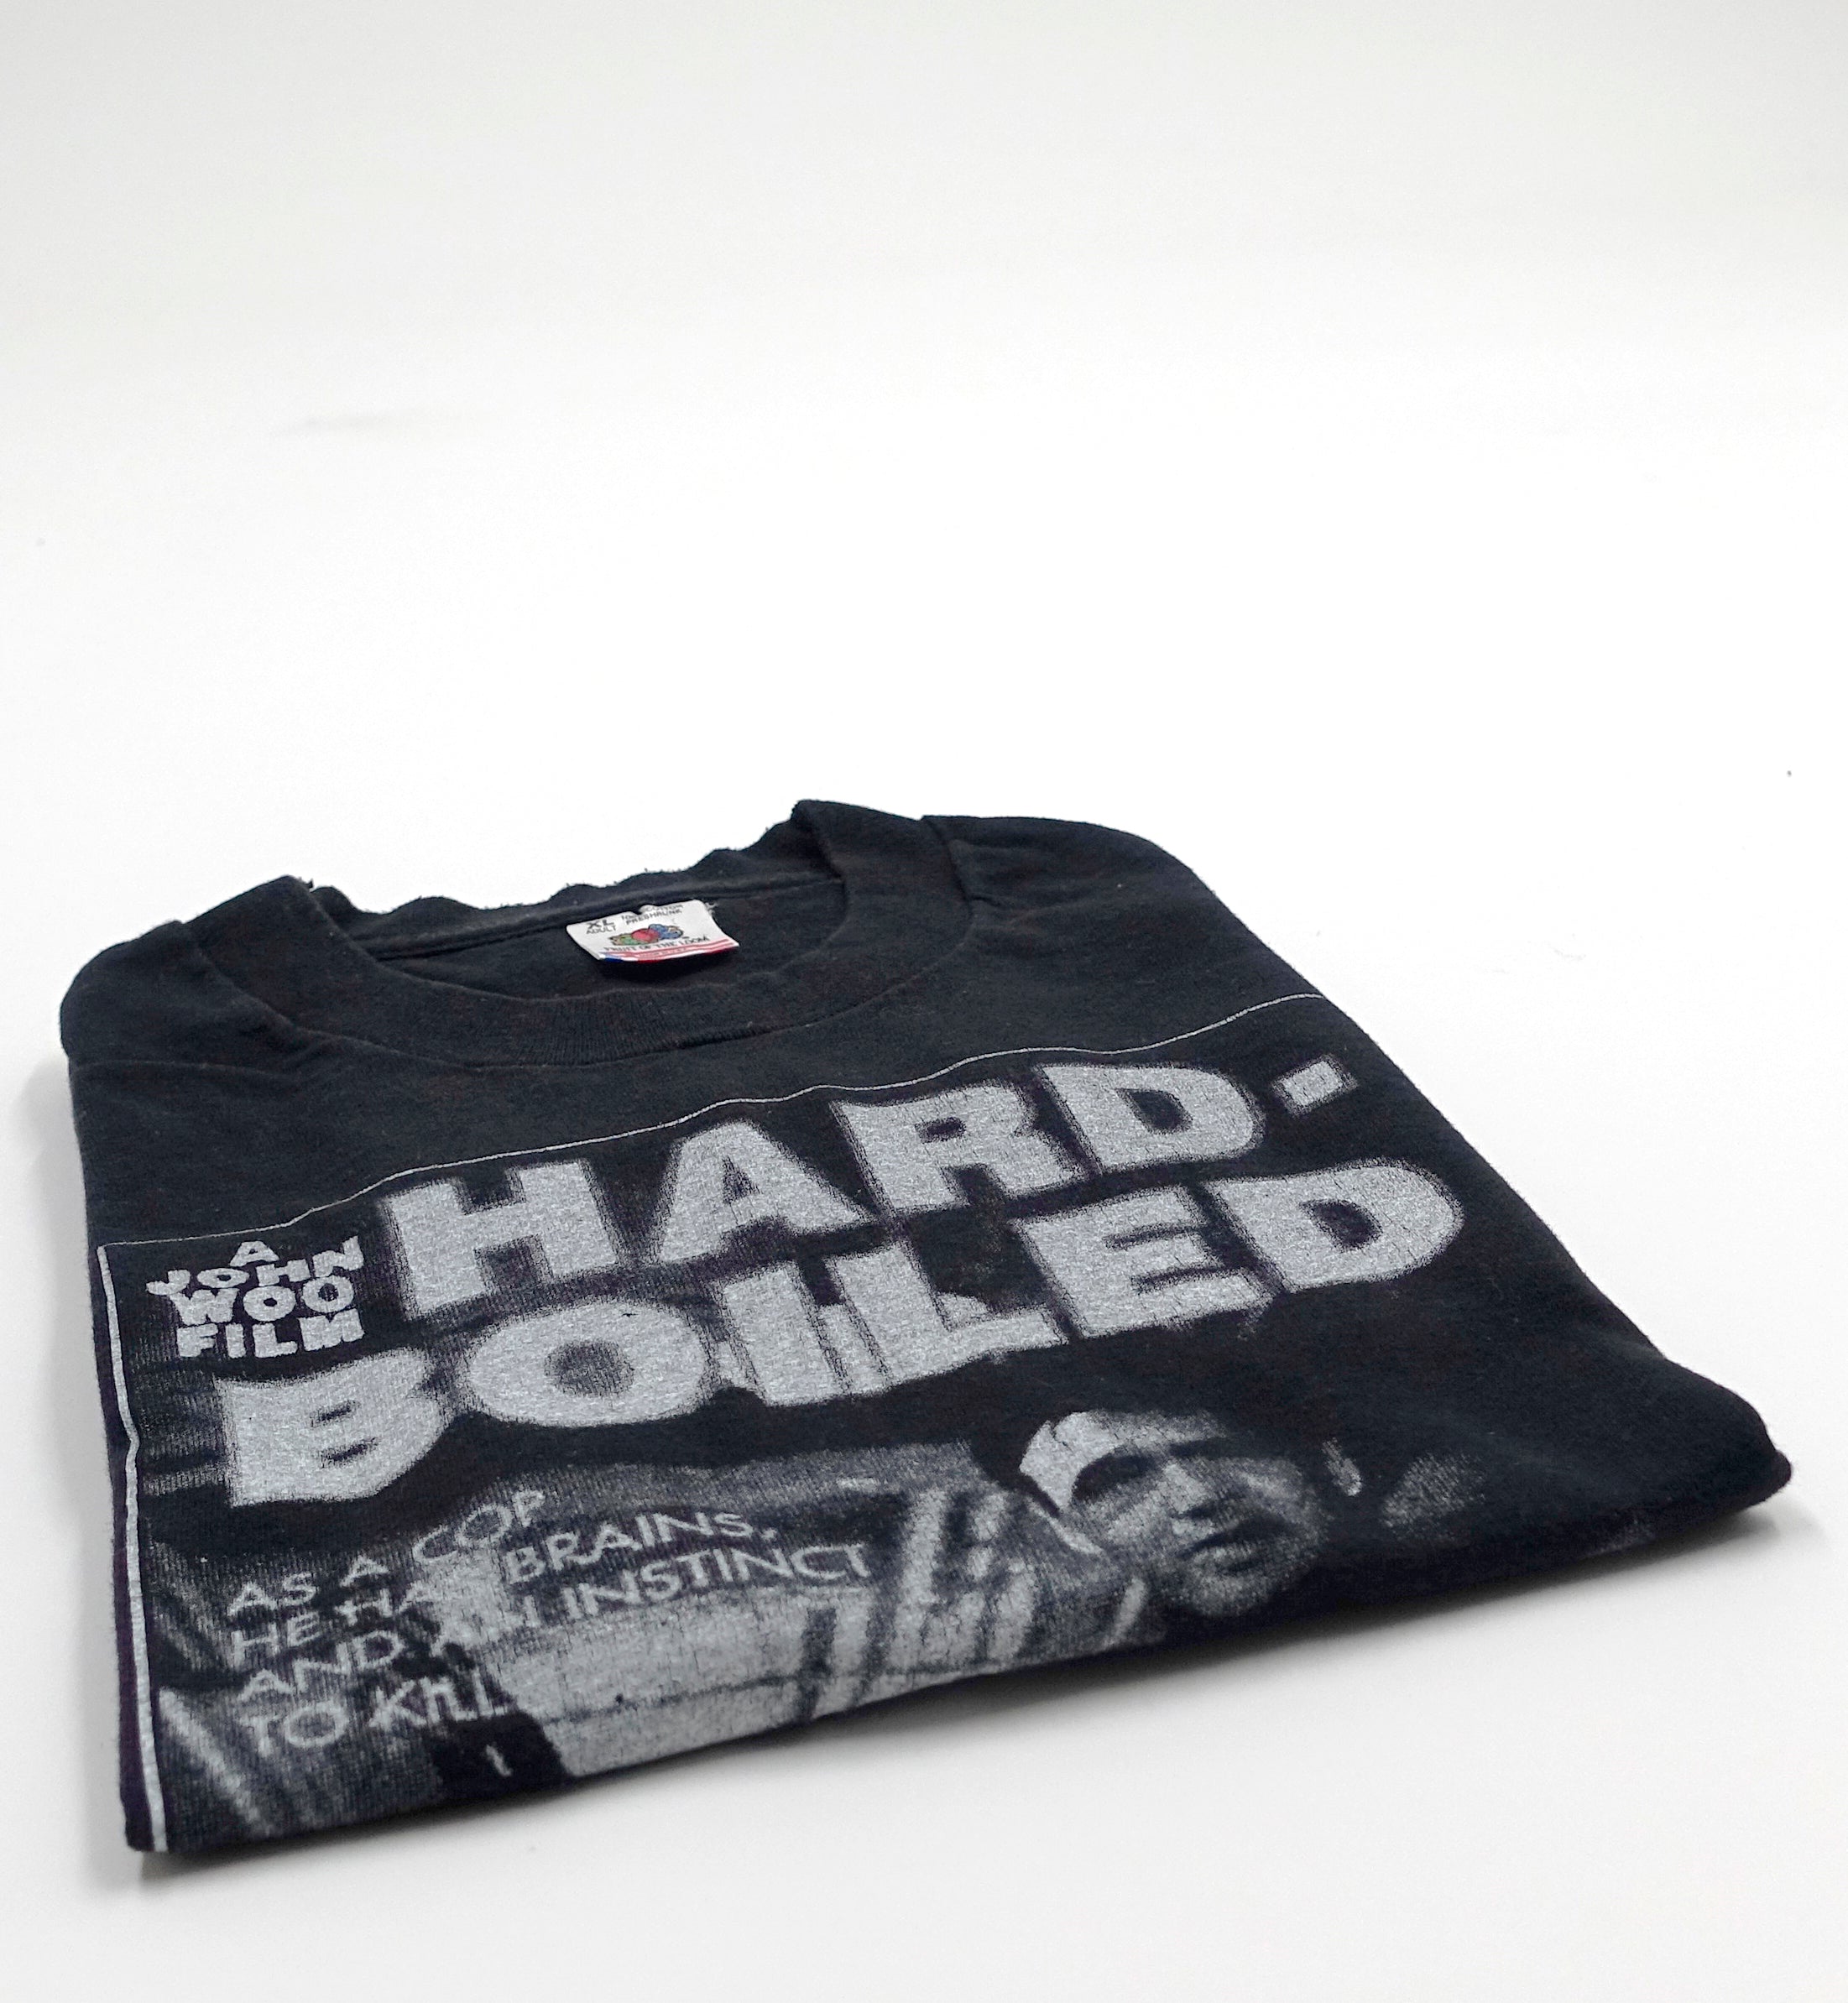 Hard Boiled - John Woo Motion Picture Shirt Size XL